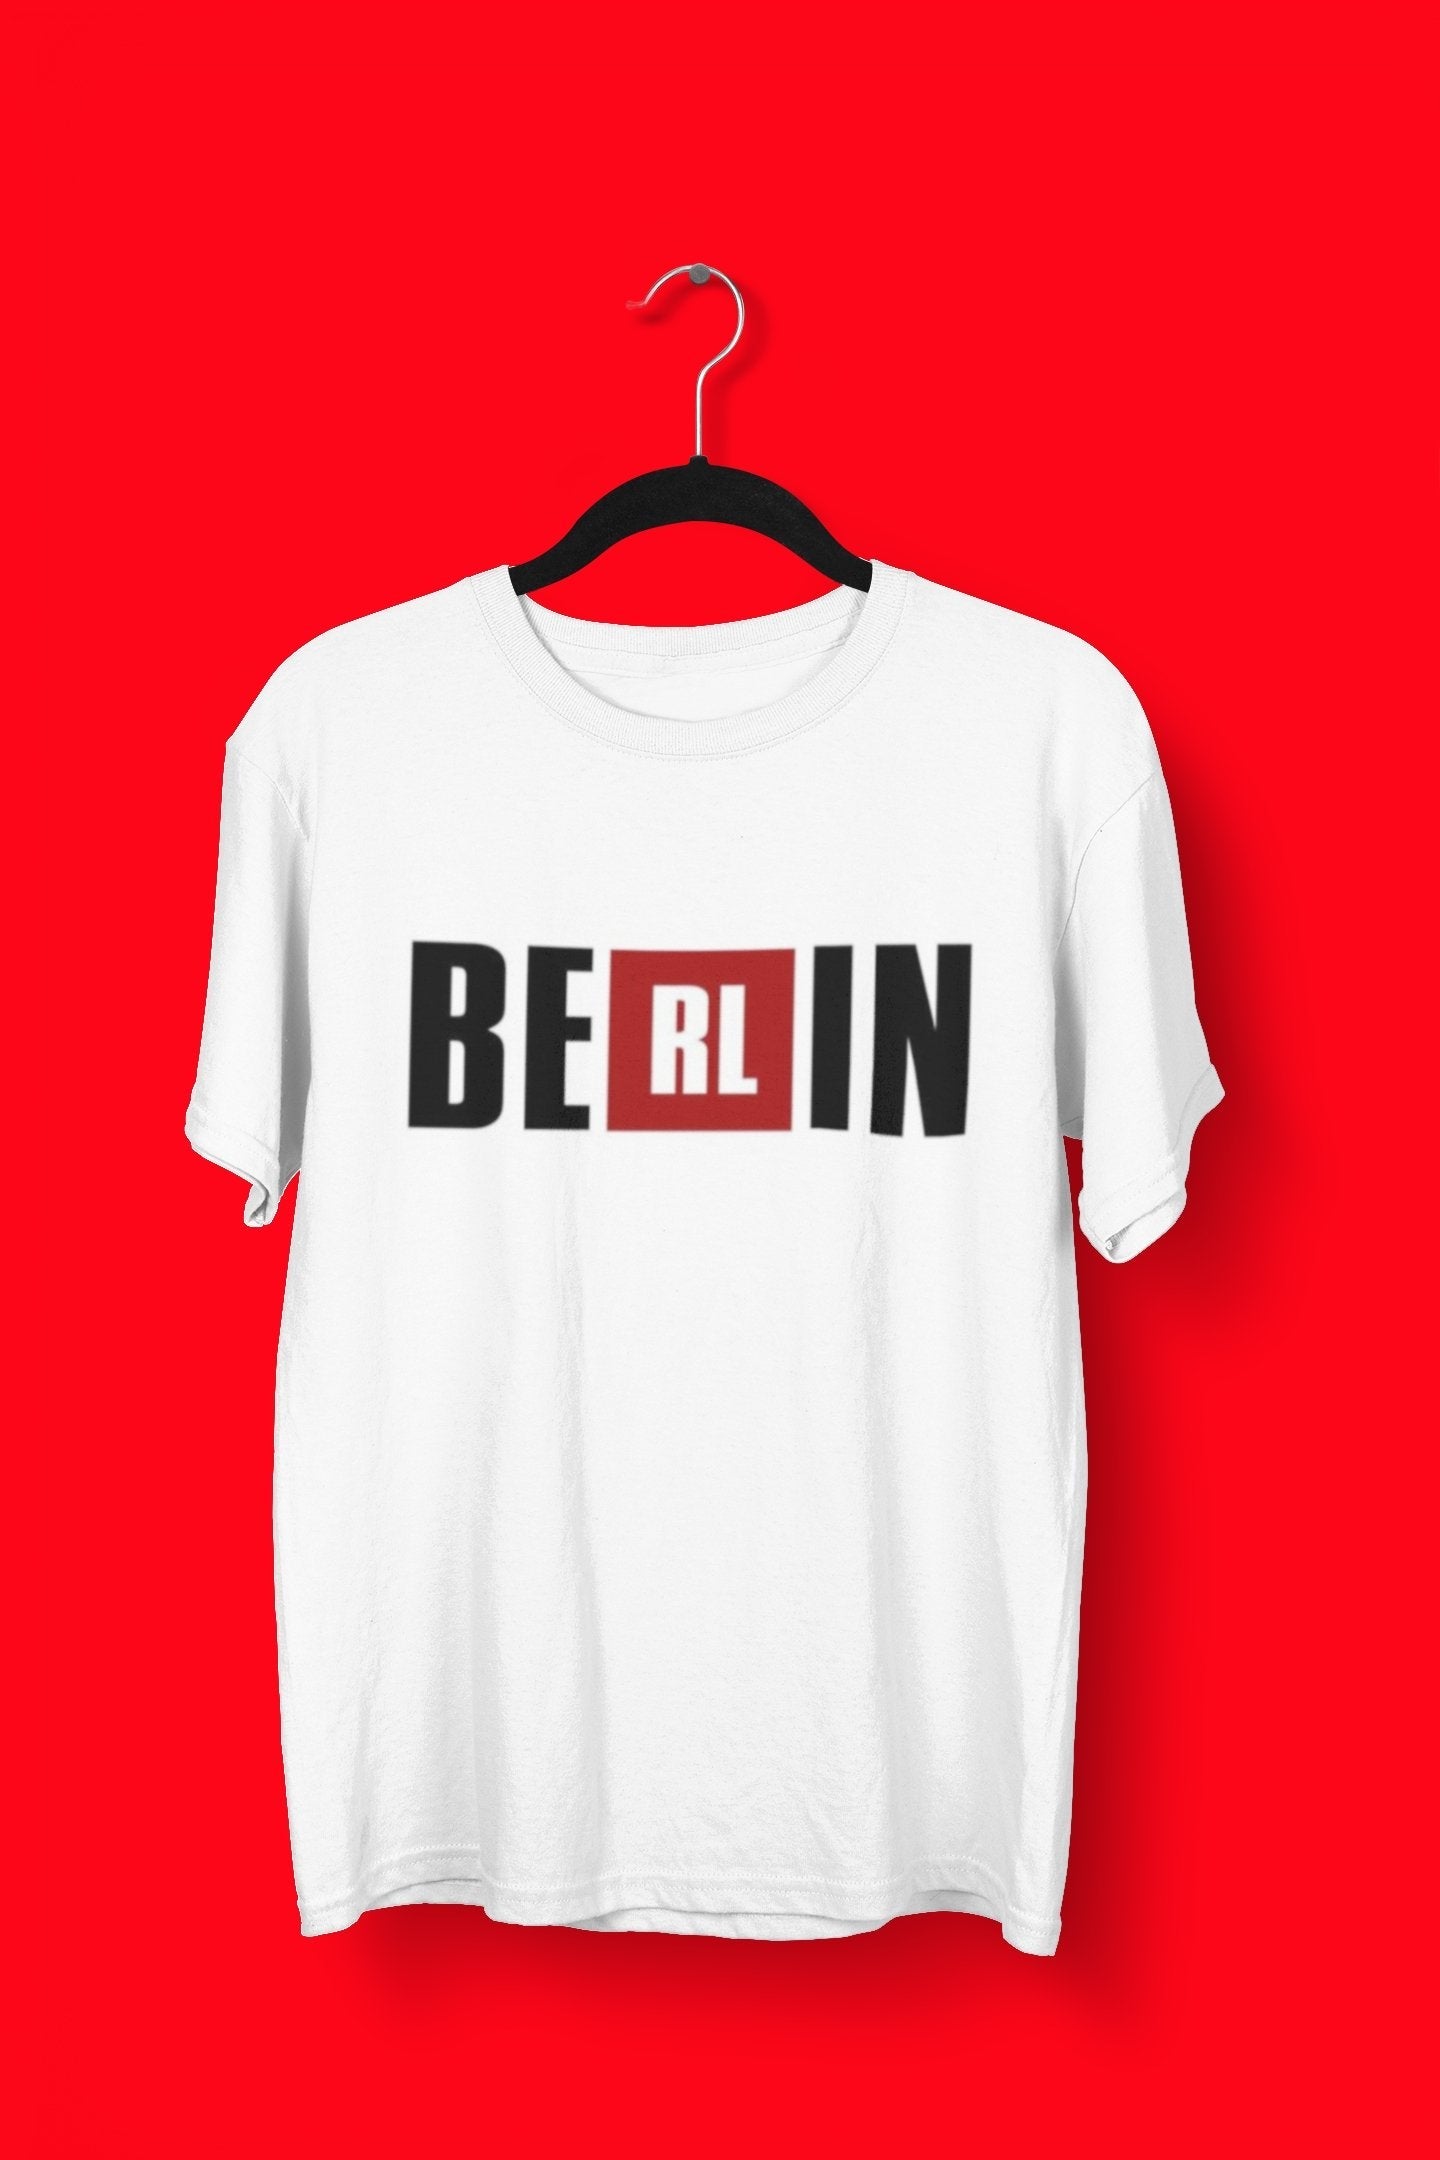 thelegalgang,Money Heist Character T Shirt for Men - Berlin,.